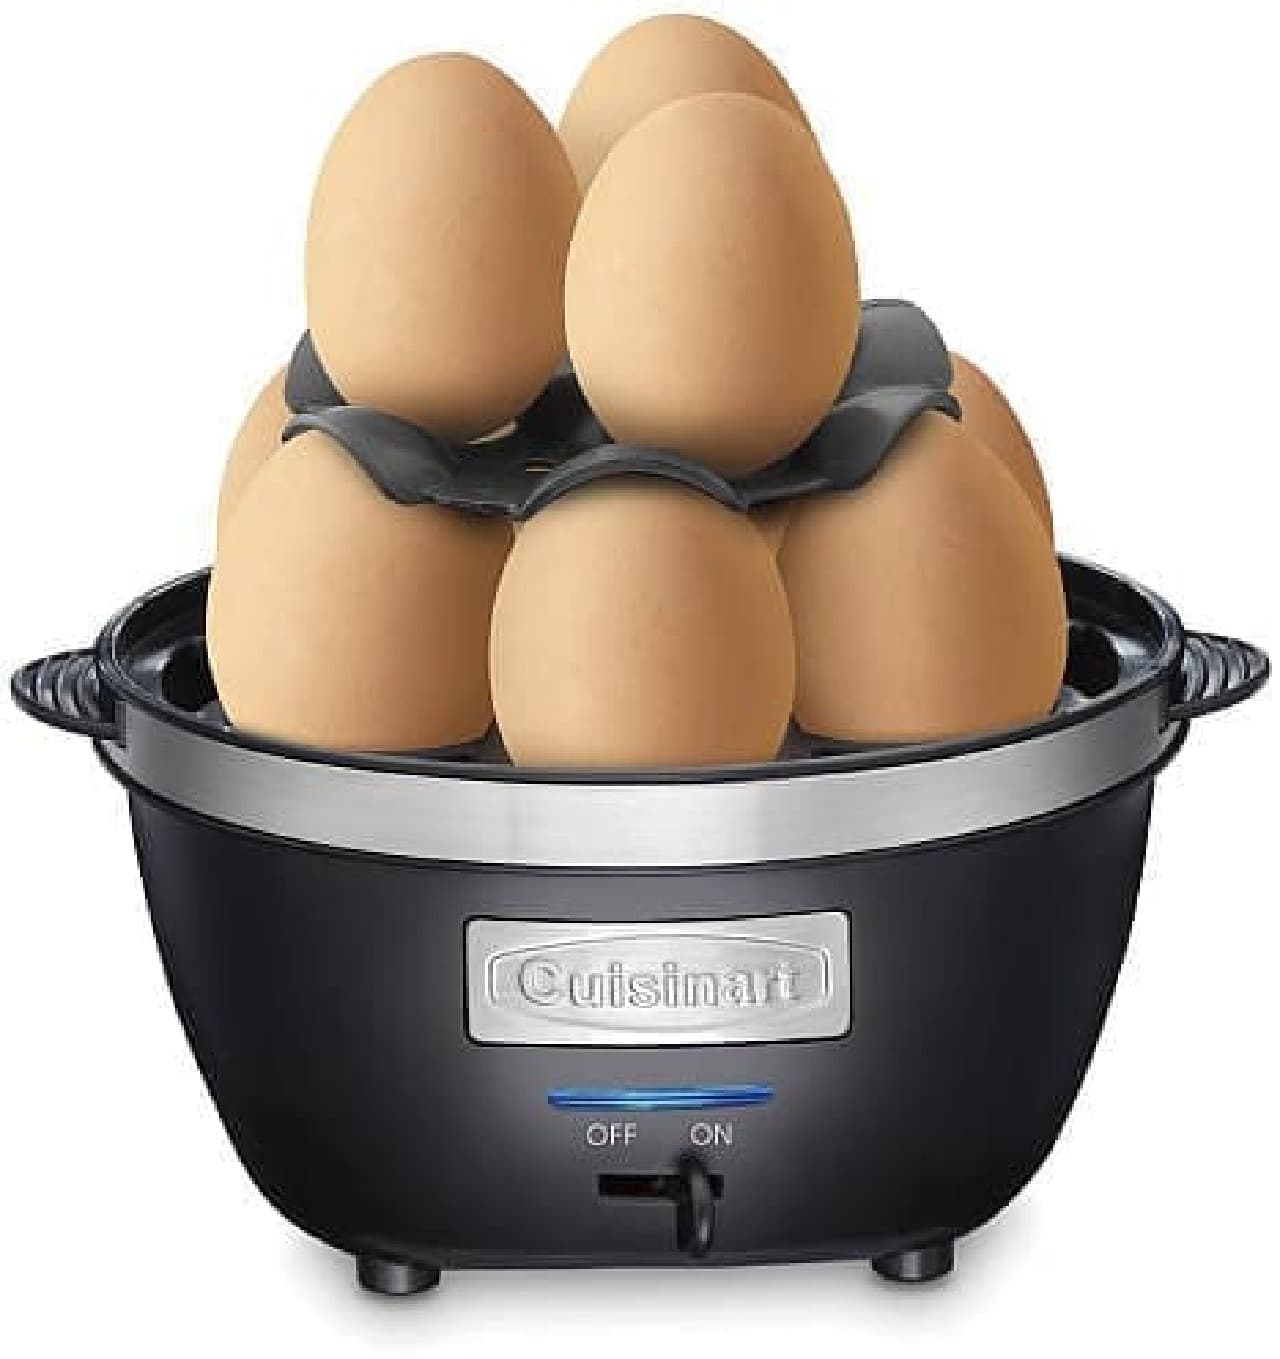 「CEC-10 Egg Central Egg Cooker」  1度に10個の卵を茹でられます